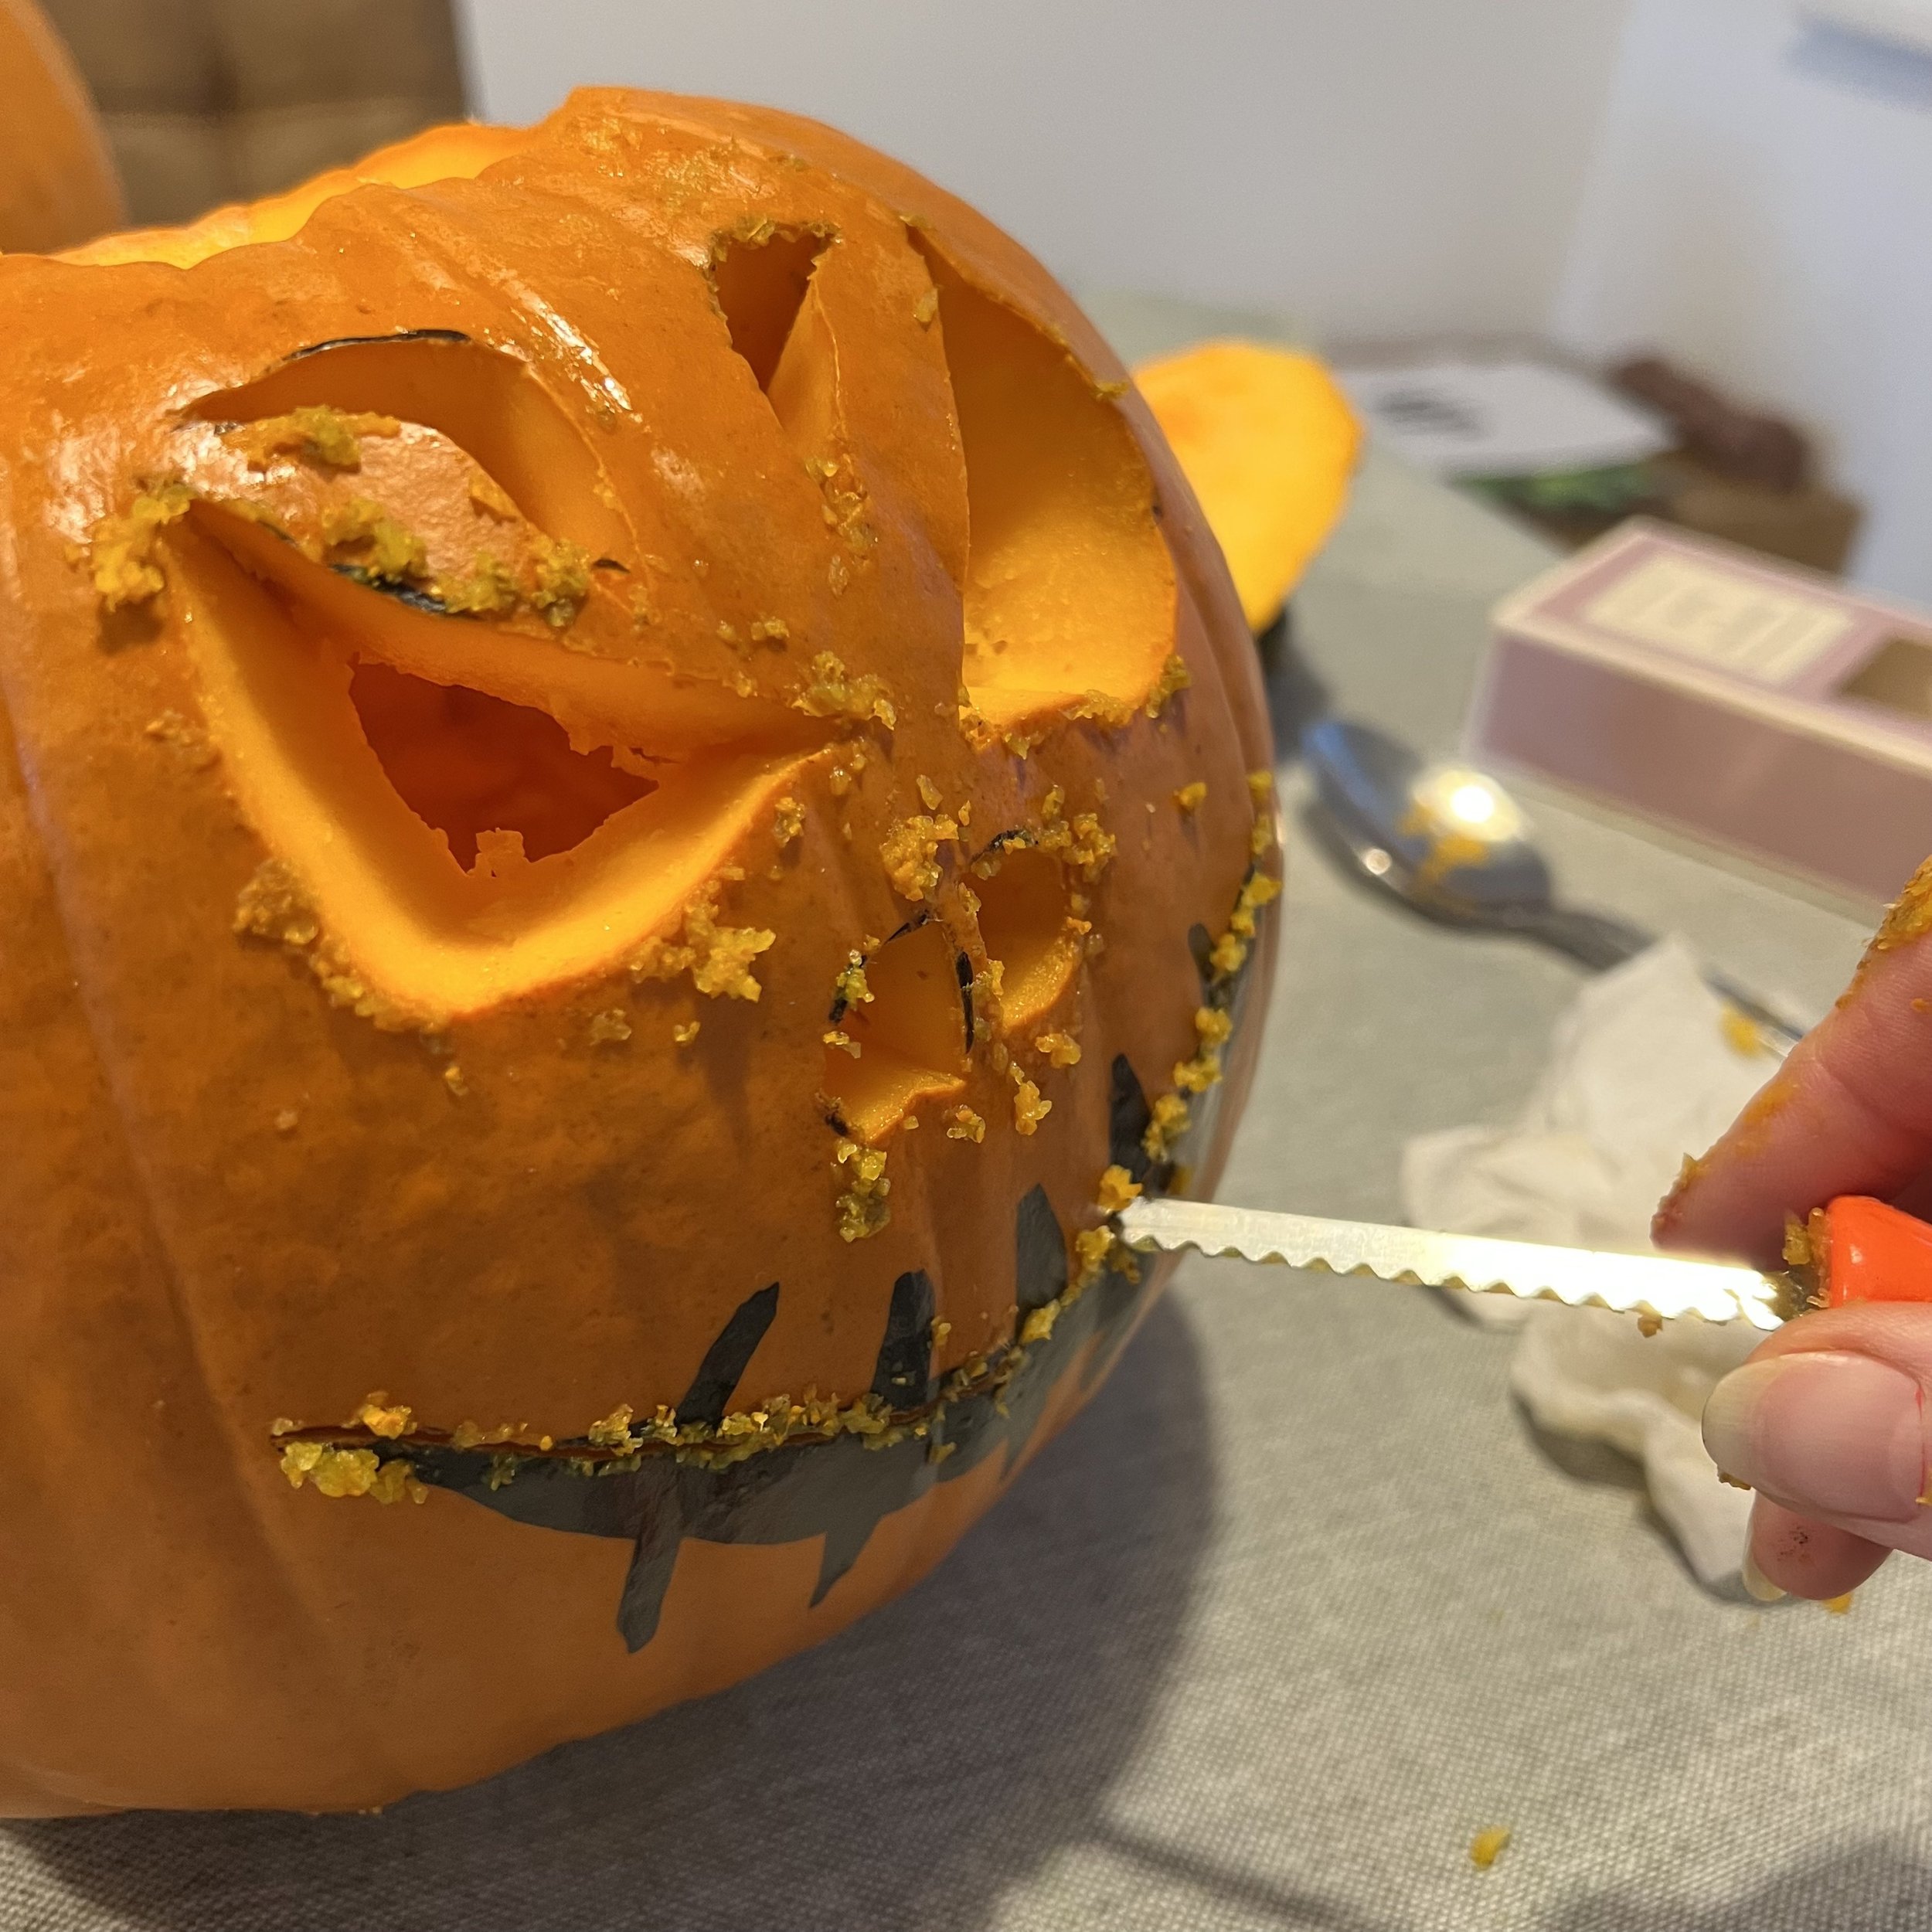 Pumpkin-Carving-Scary-Face-In-Progress-Sarah-Ransome-Art.jpg